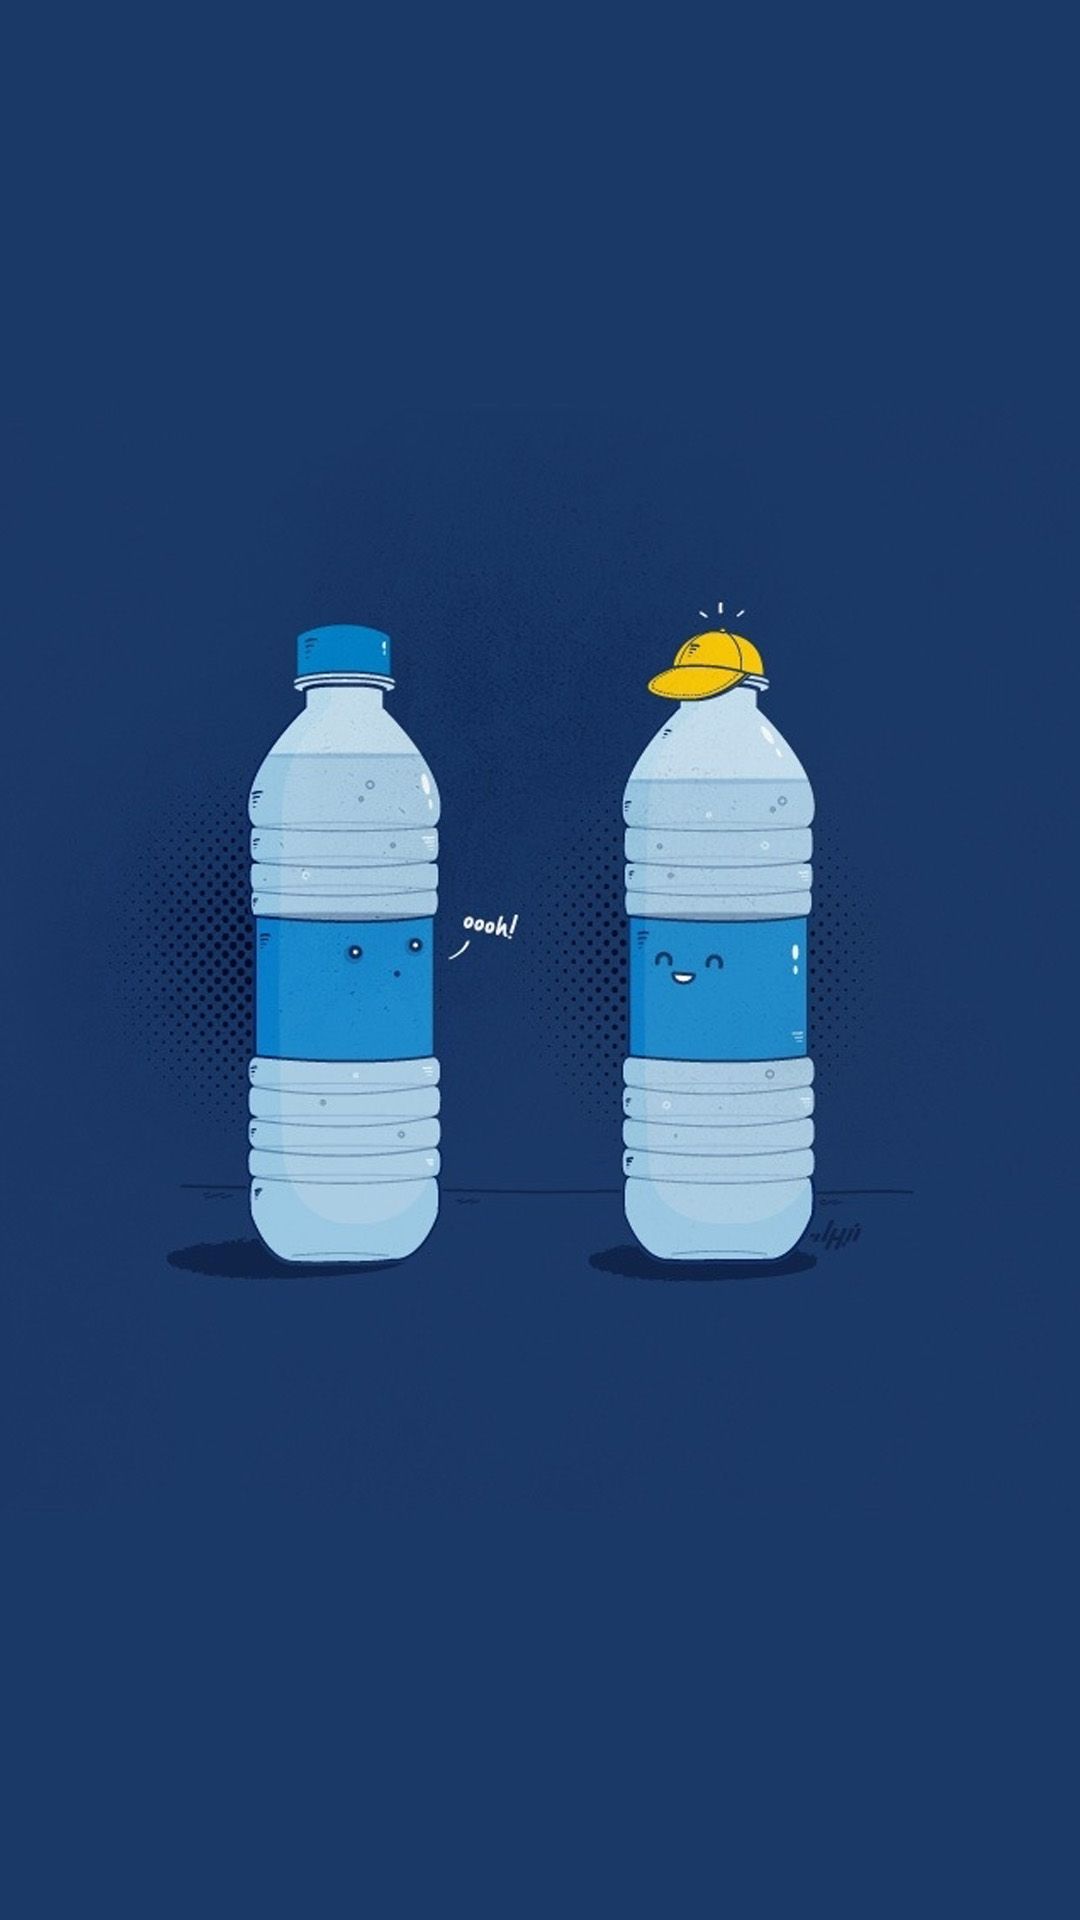 Bottle Cap Funny illustration Creative poster design 1080x1920